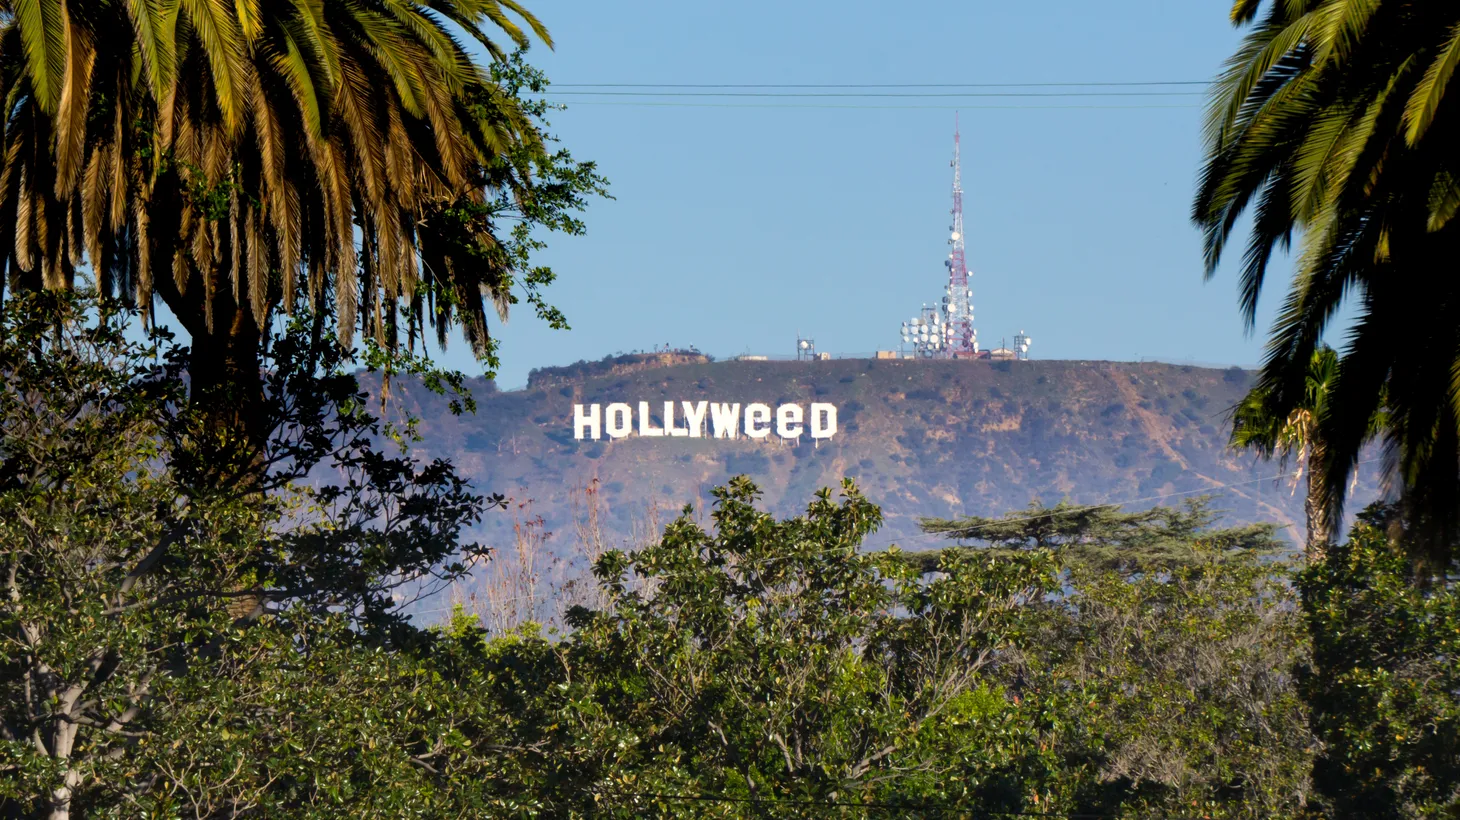 Artist/prankster Zach Fernandez transformed the Hollywood sign to mark the legalization of marijuana in California in 2017.